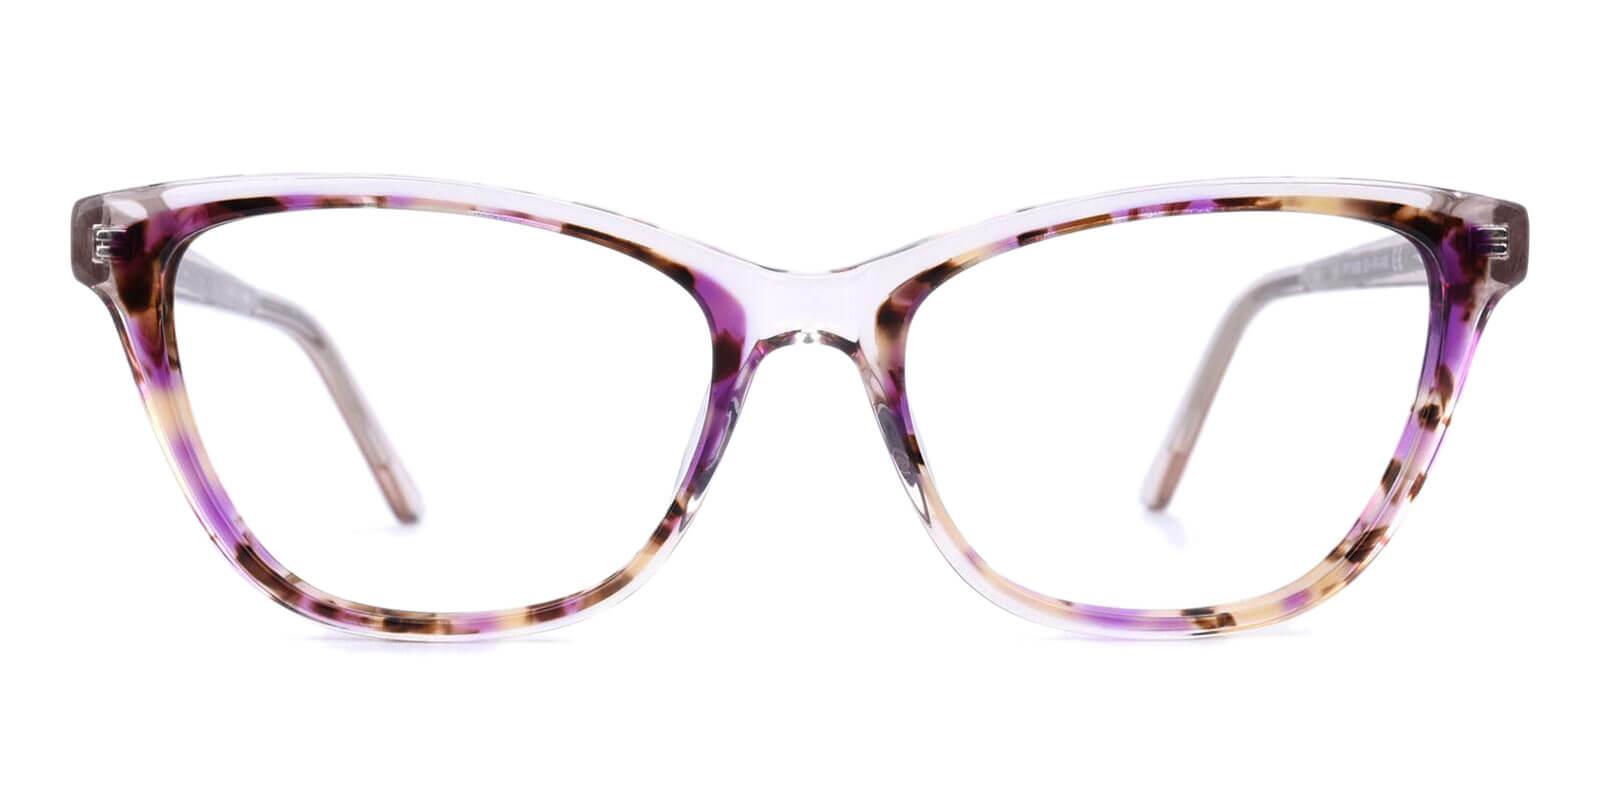 Strauss Purple Acetate Eyeglasses , UniversalBridgeFit Frames from ABBE Glasses